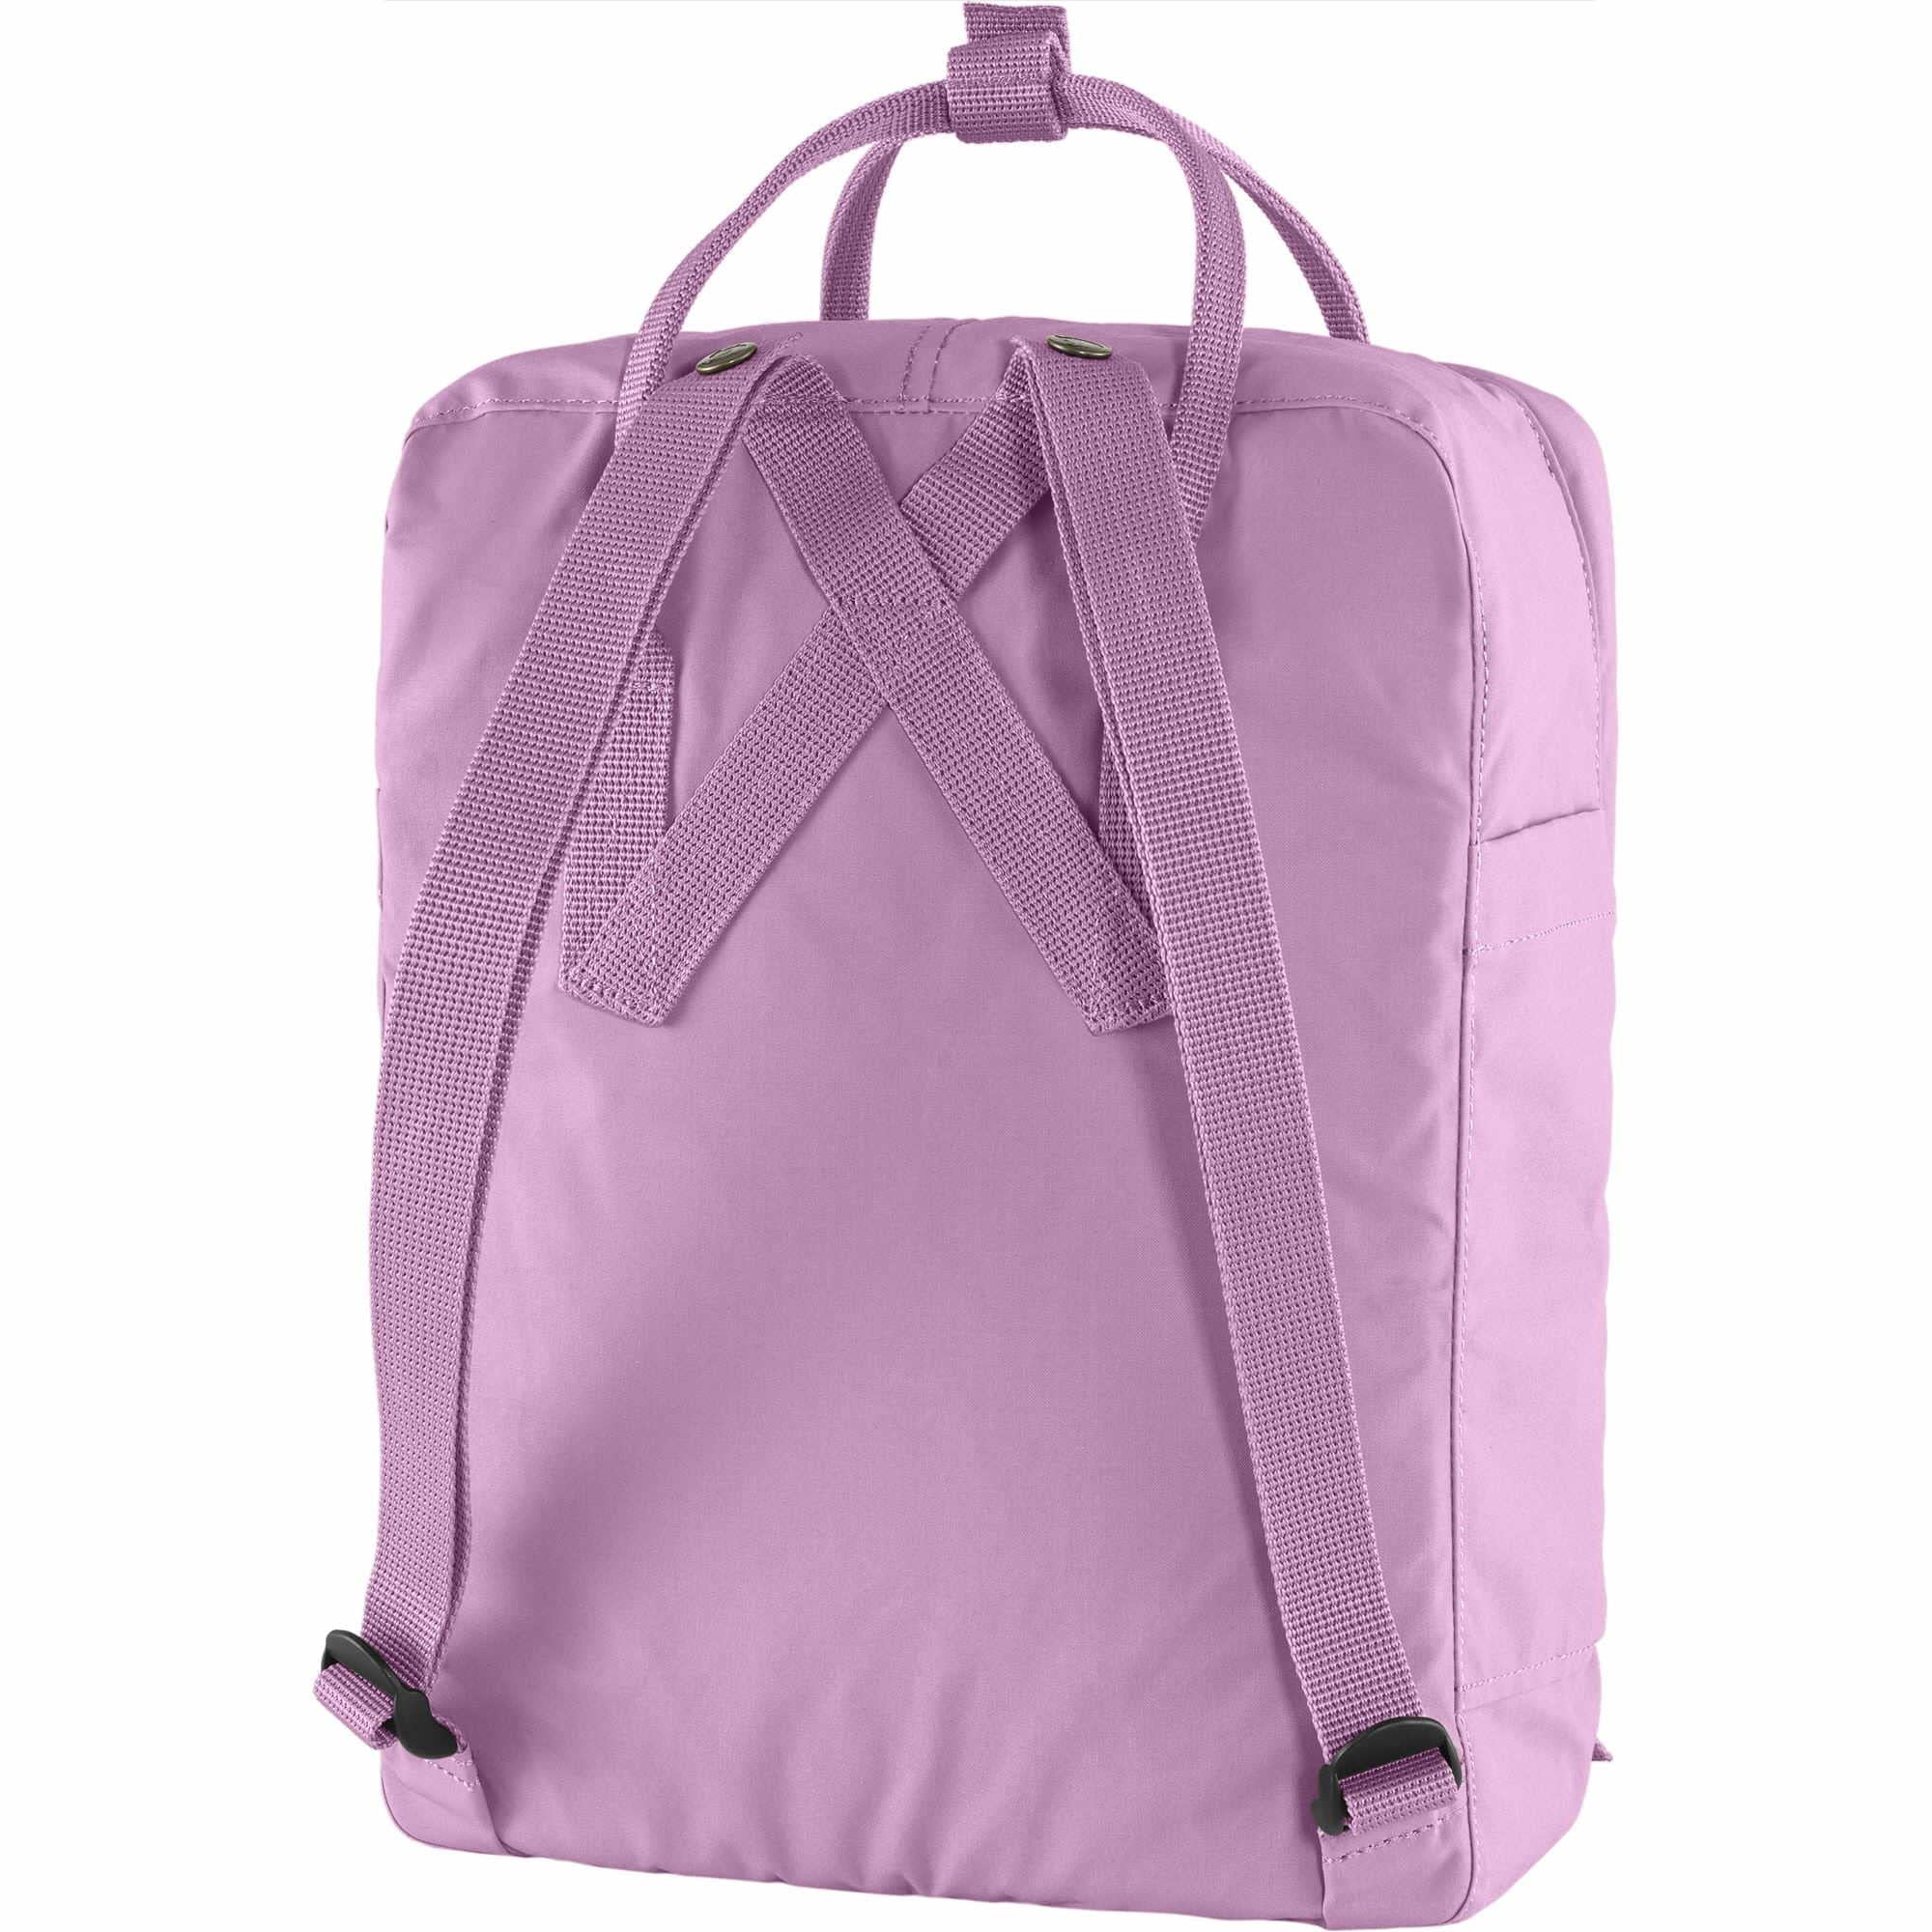 Fjallraven, Kanken Classic Backpack for Everyday, Orchid